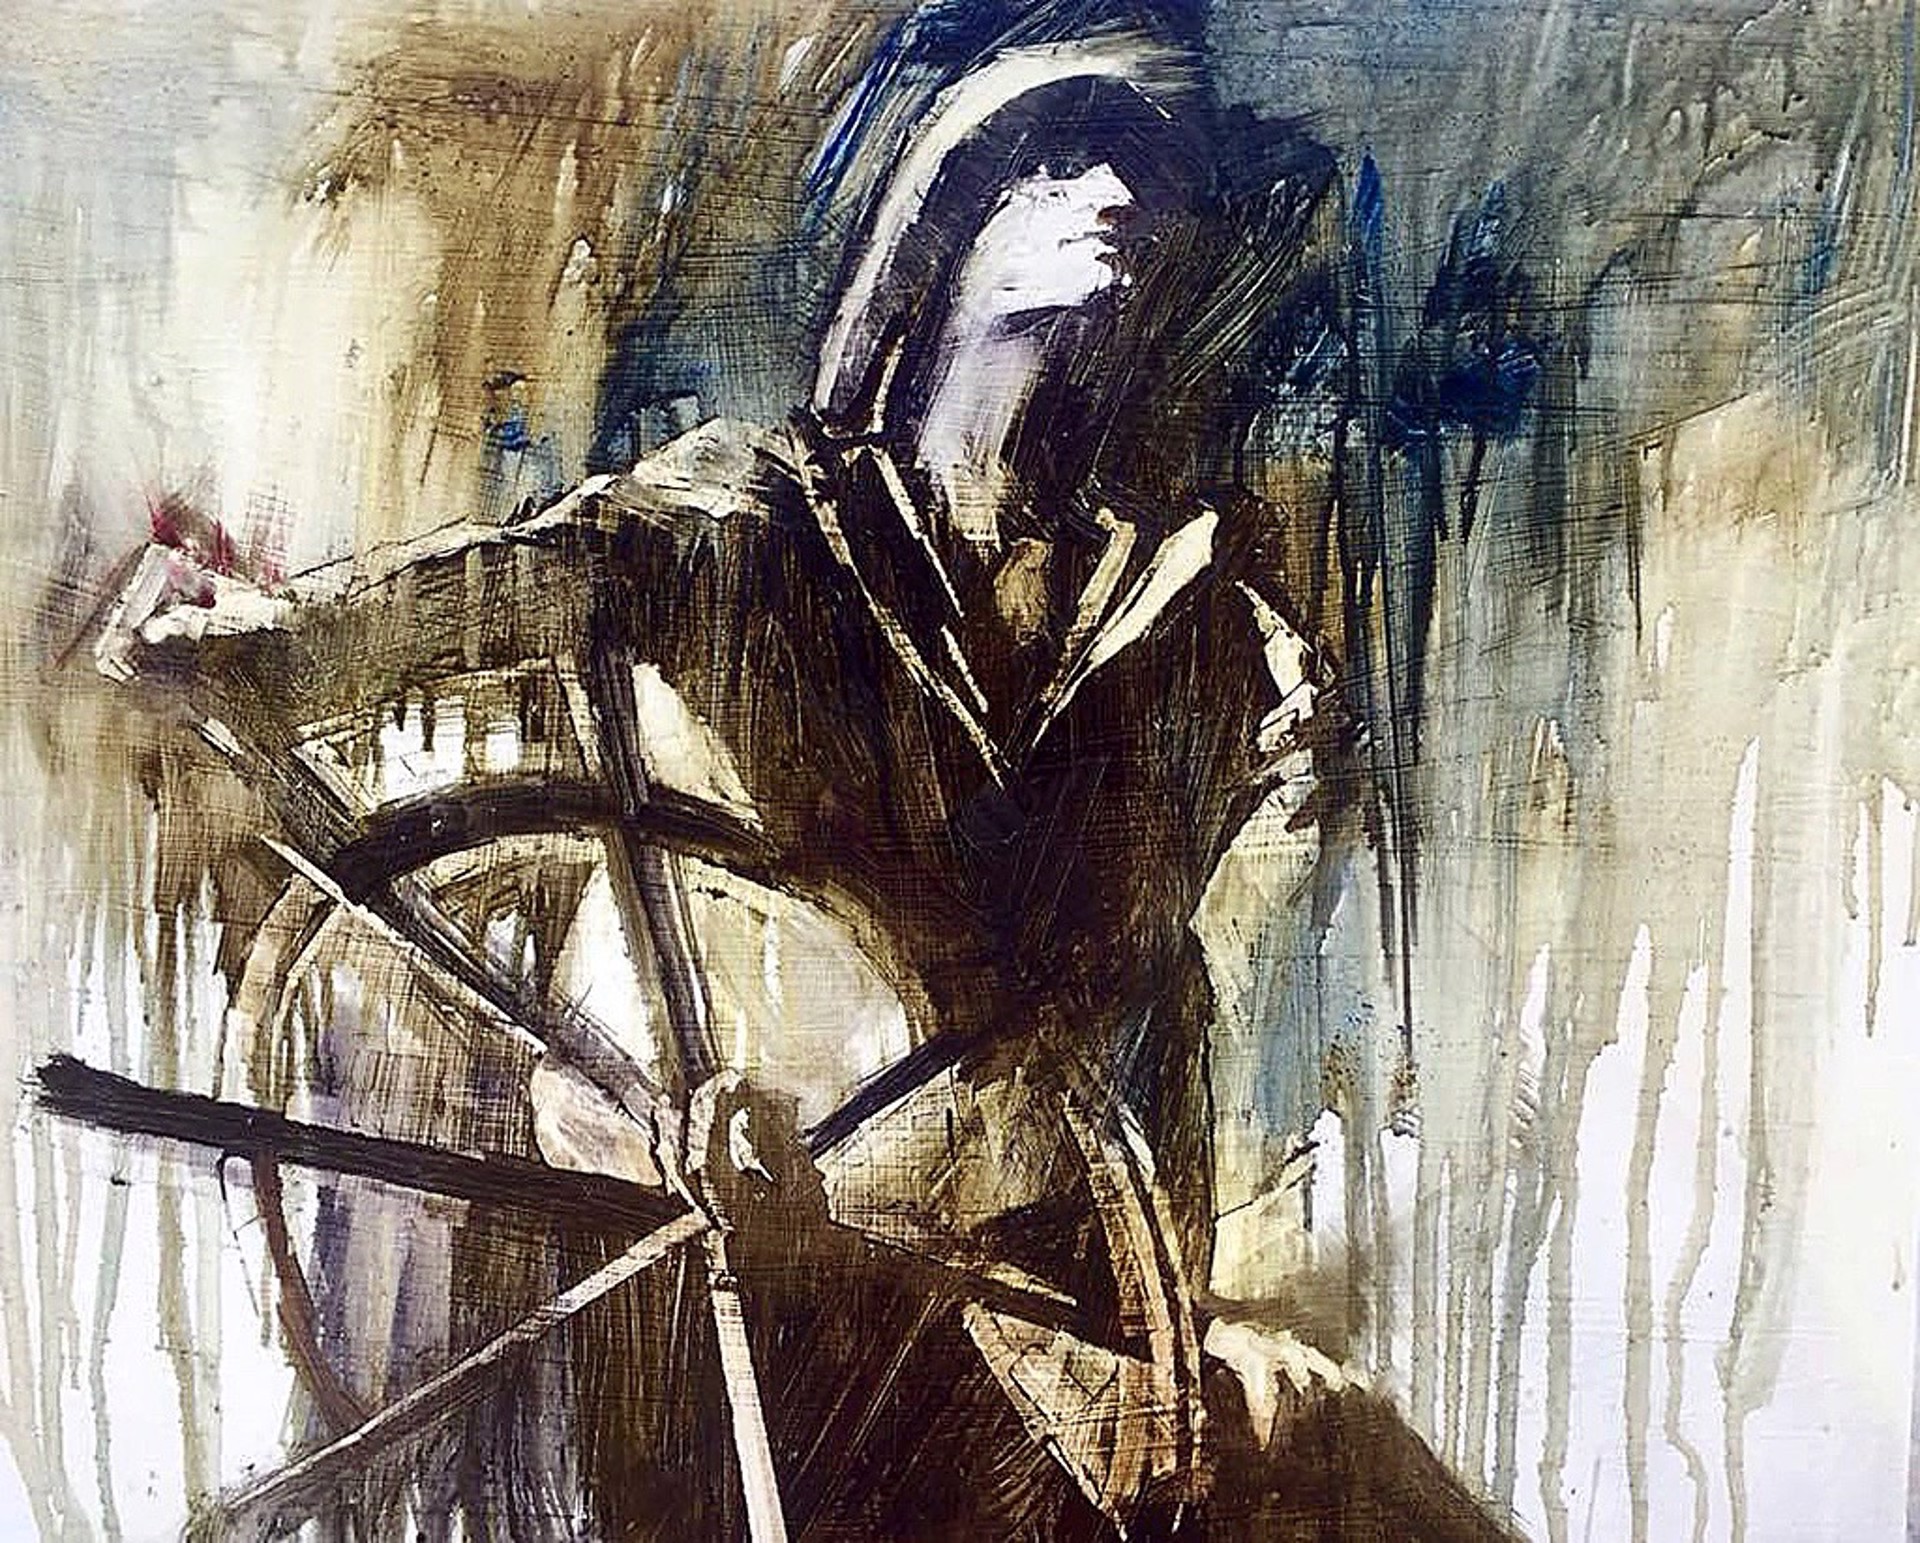 Man at the Wheel by Beth Bathe